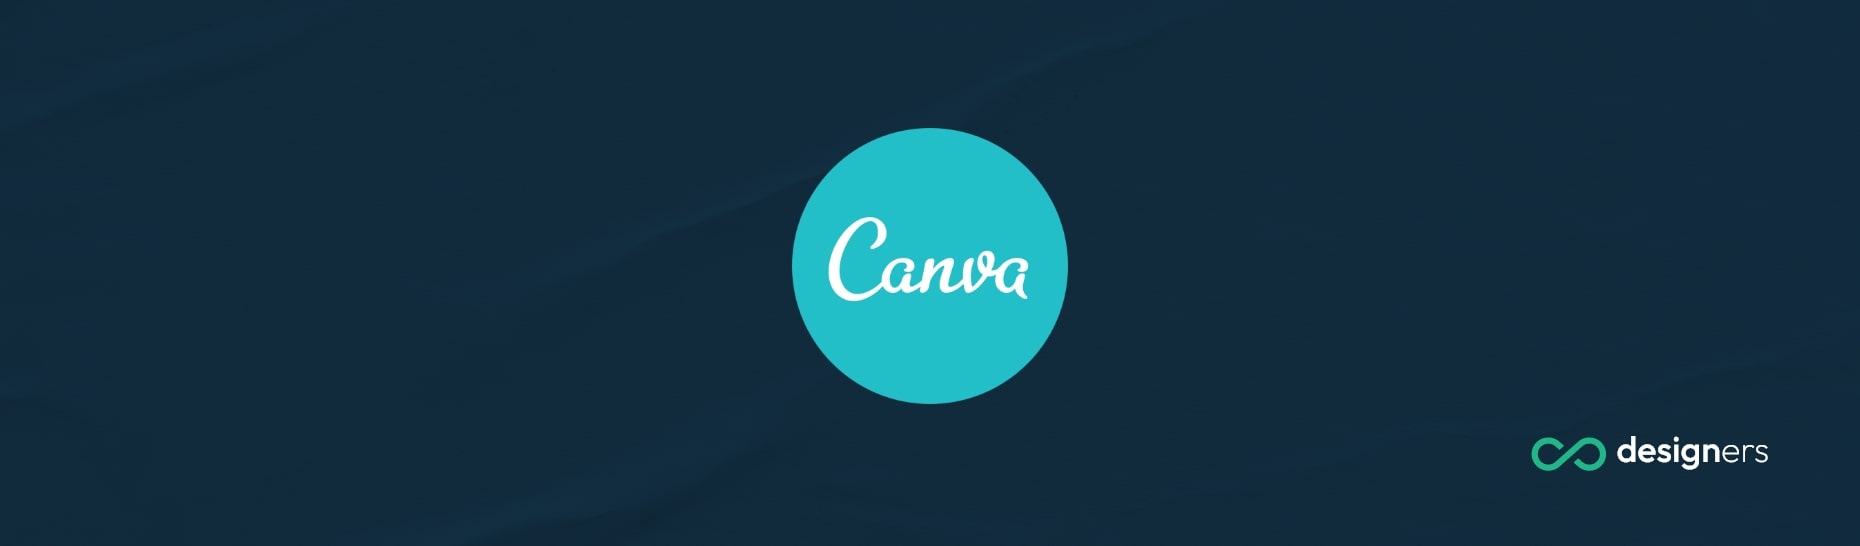 Can Canva Create Websites?